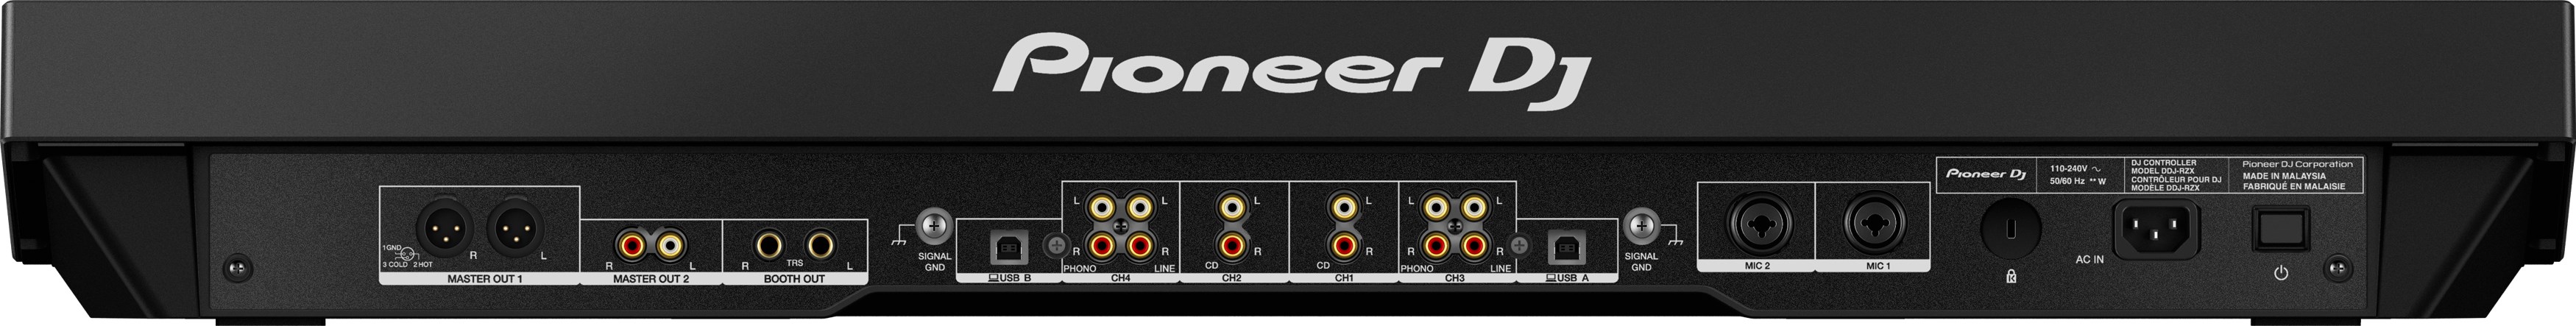 Pioneer Dj Ddj-rzx - USB DJ-Controller - Variation 3